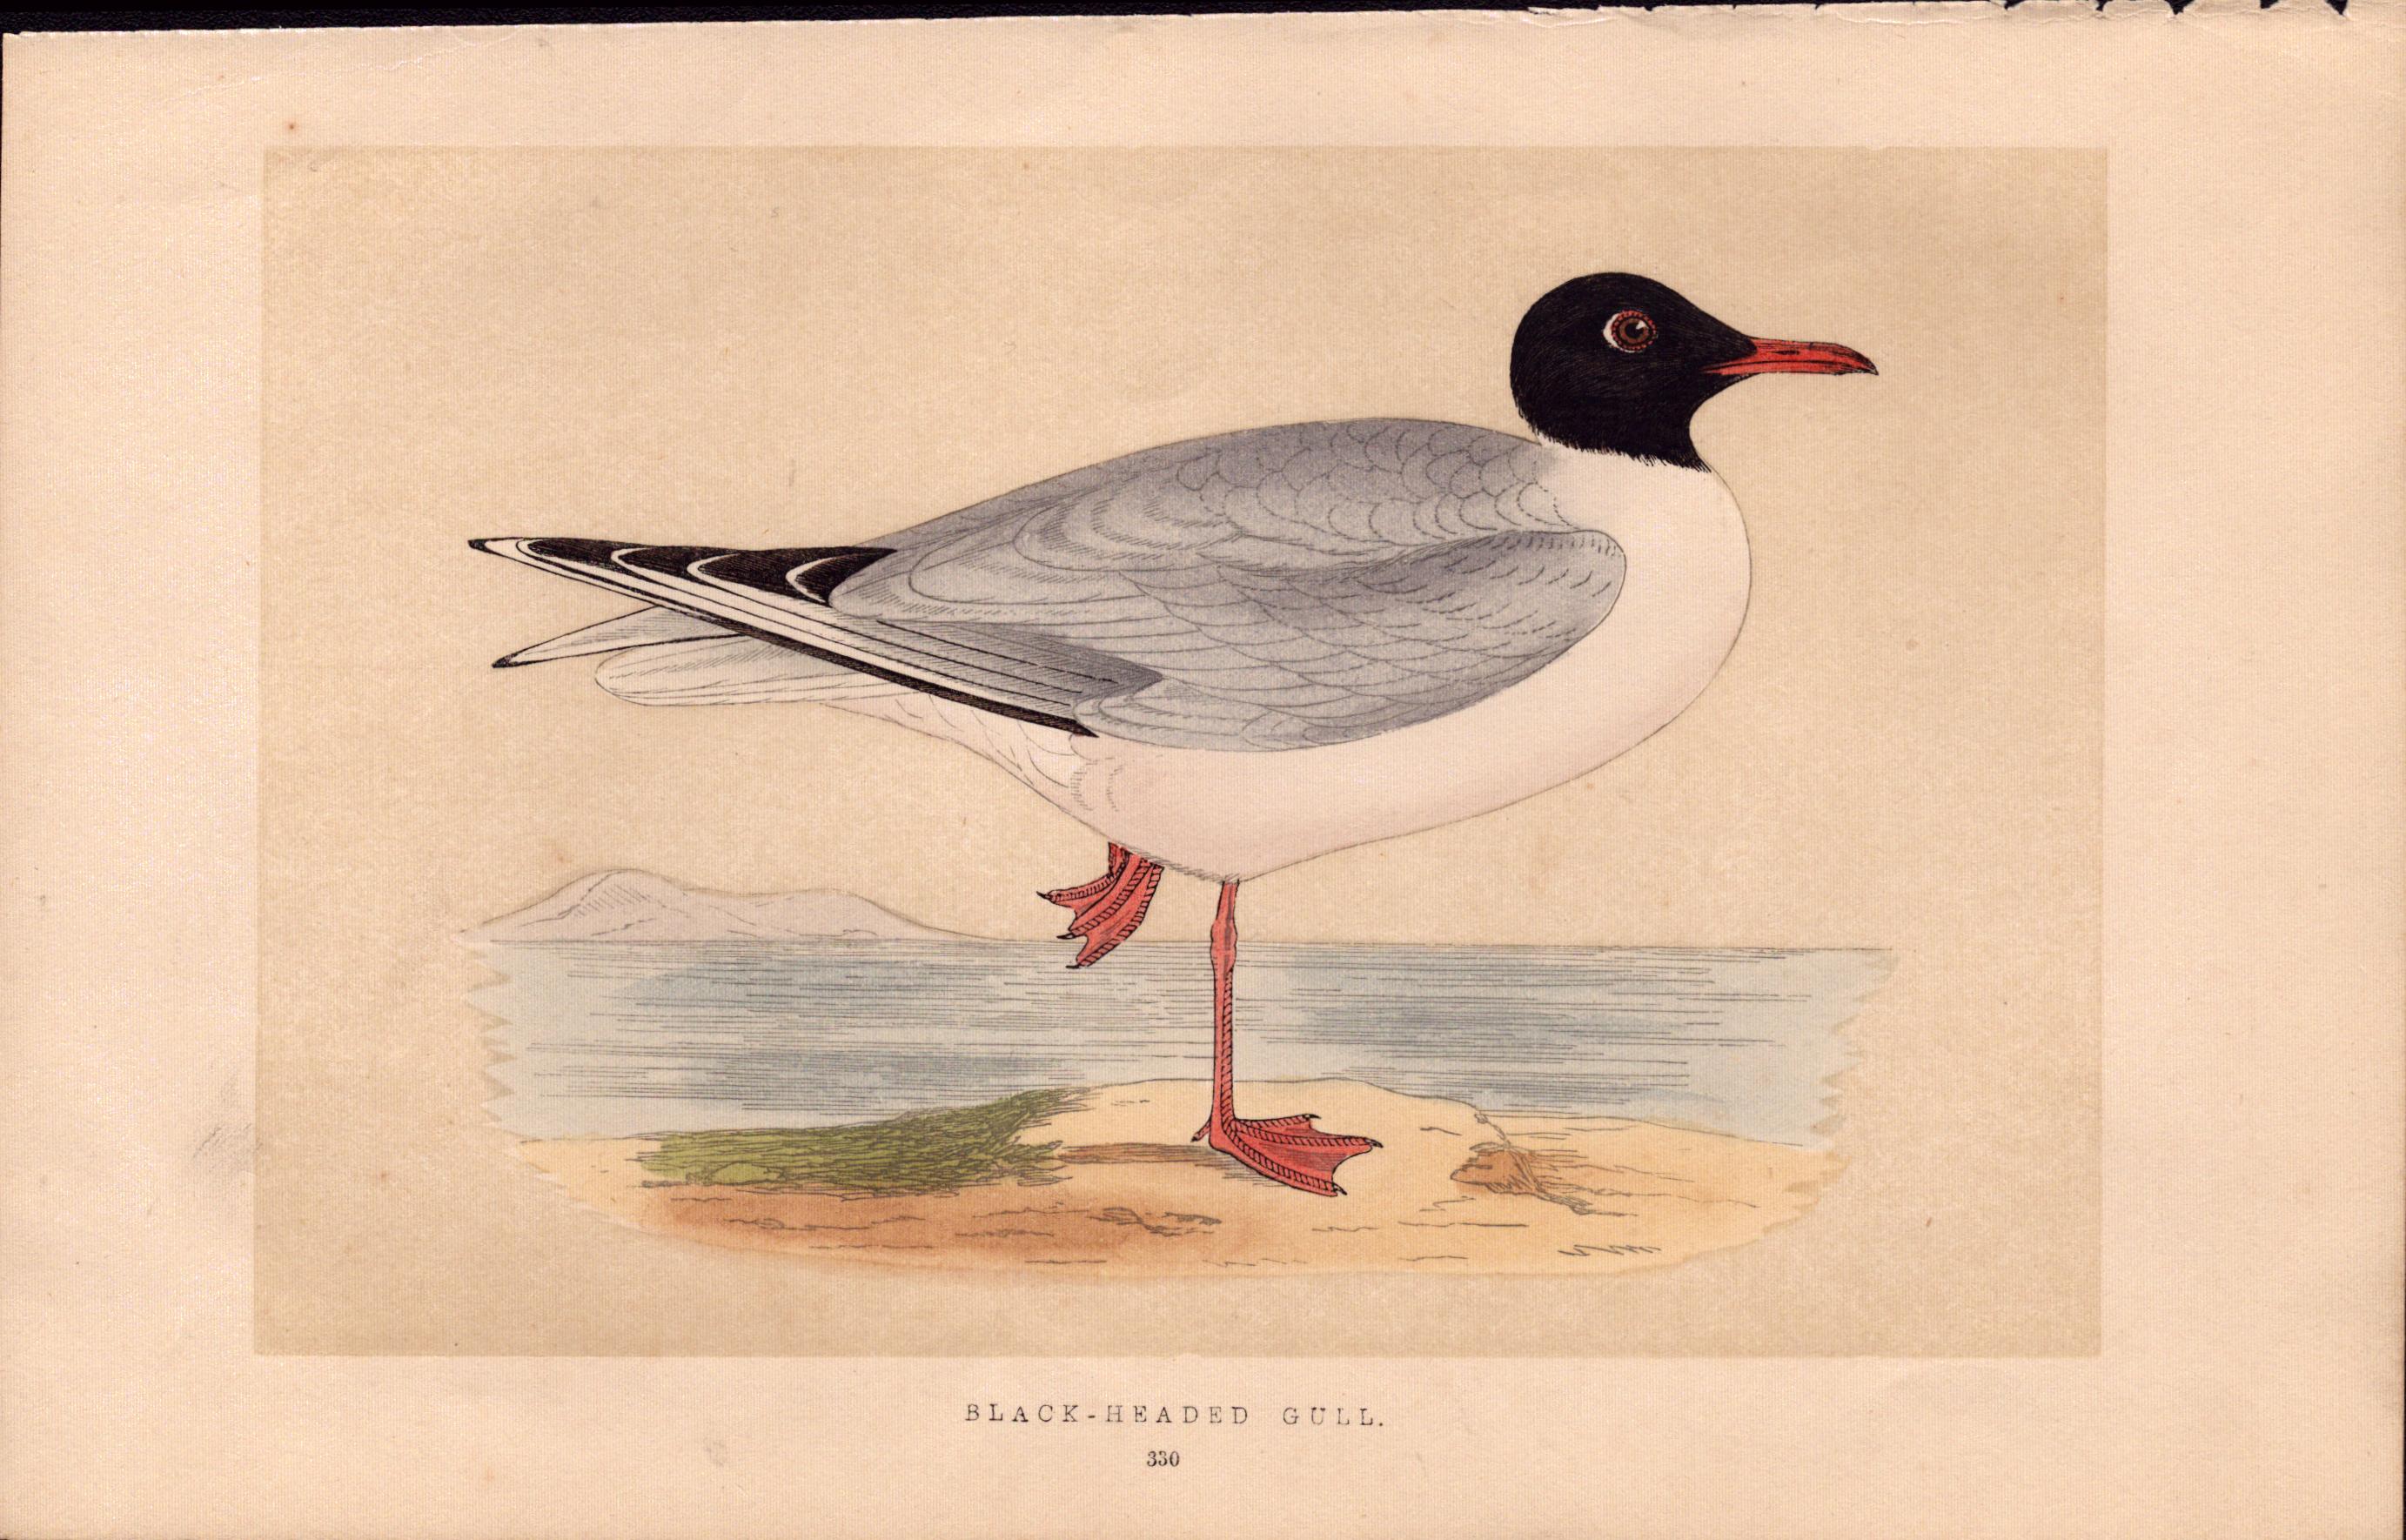 Black-Headed Gull Rev Morris Antique History of British Birds Engraving.